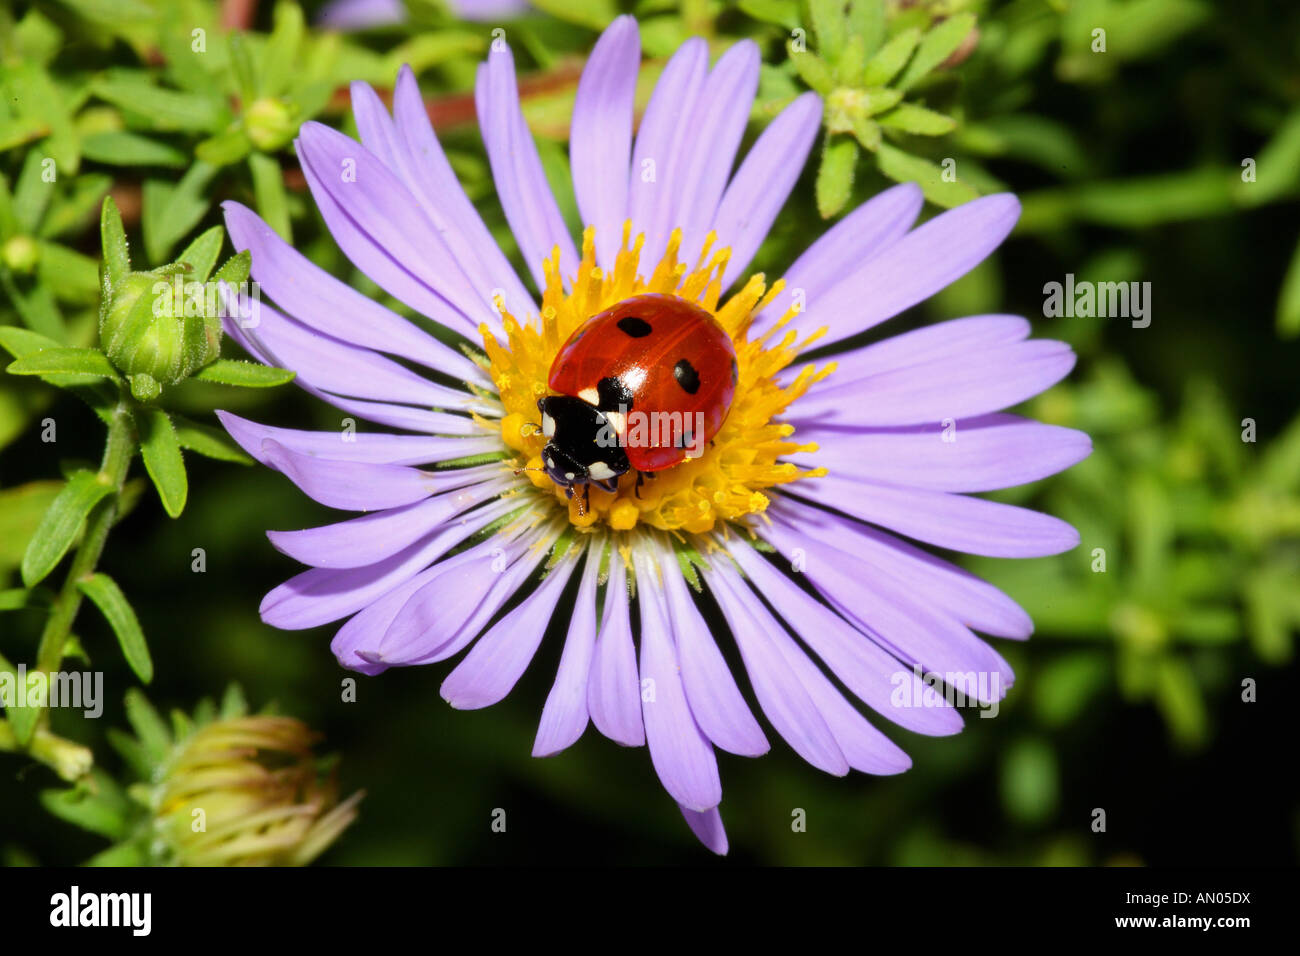 Seven-spot ladybug (Coccinella septempunctata) on a flower Stock Photo